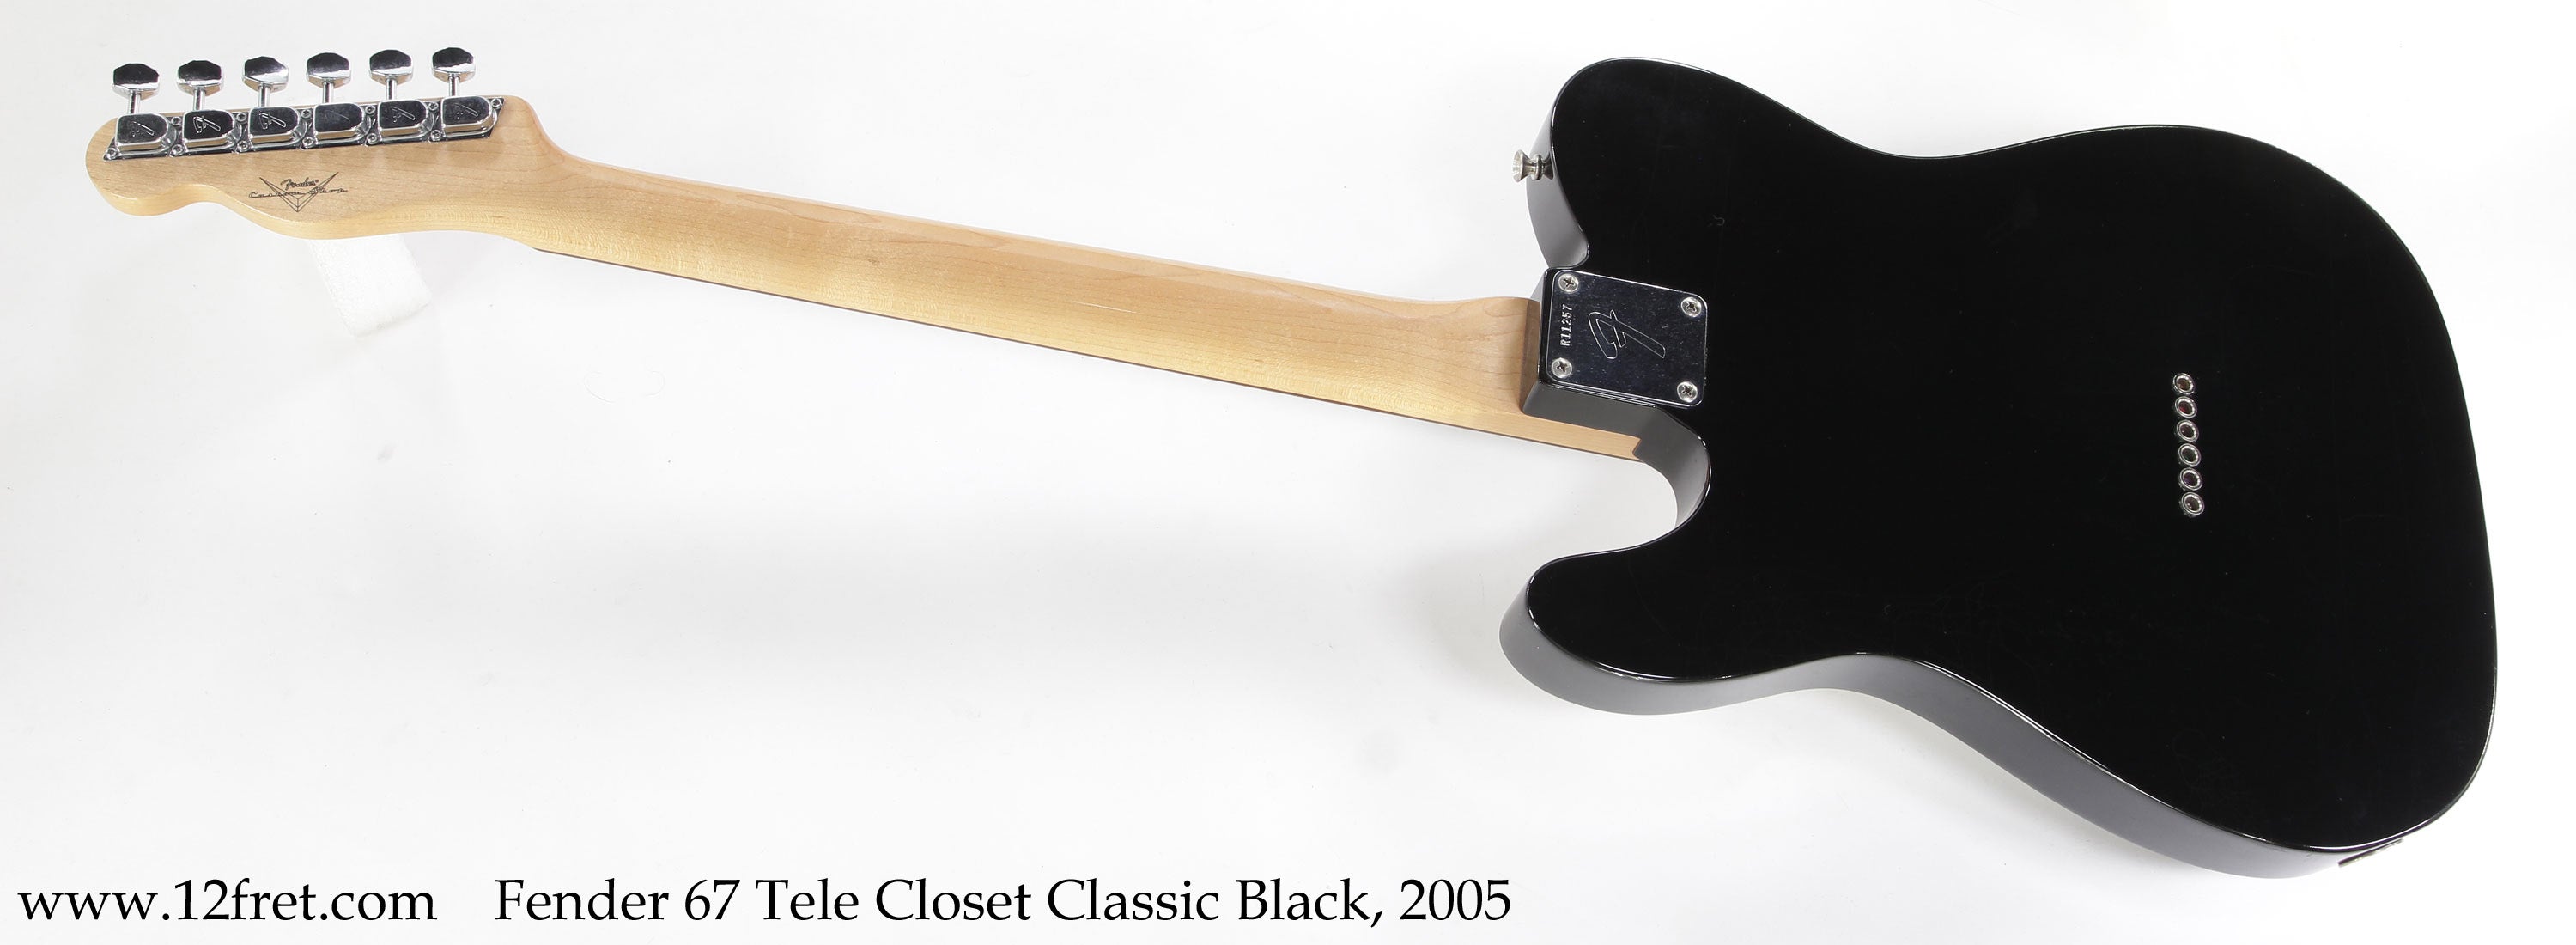 Fender 67 Tele Closet Classic Black, 2005 - The Twelfth Fret